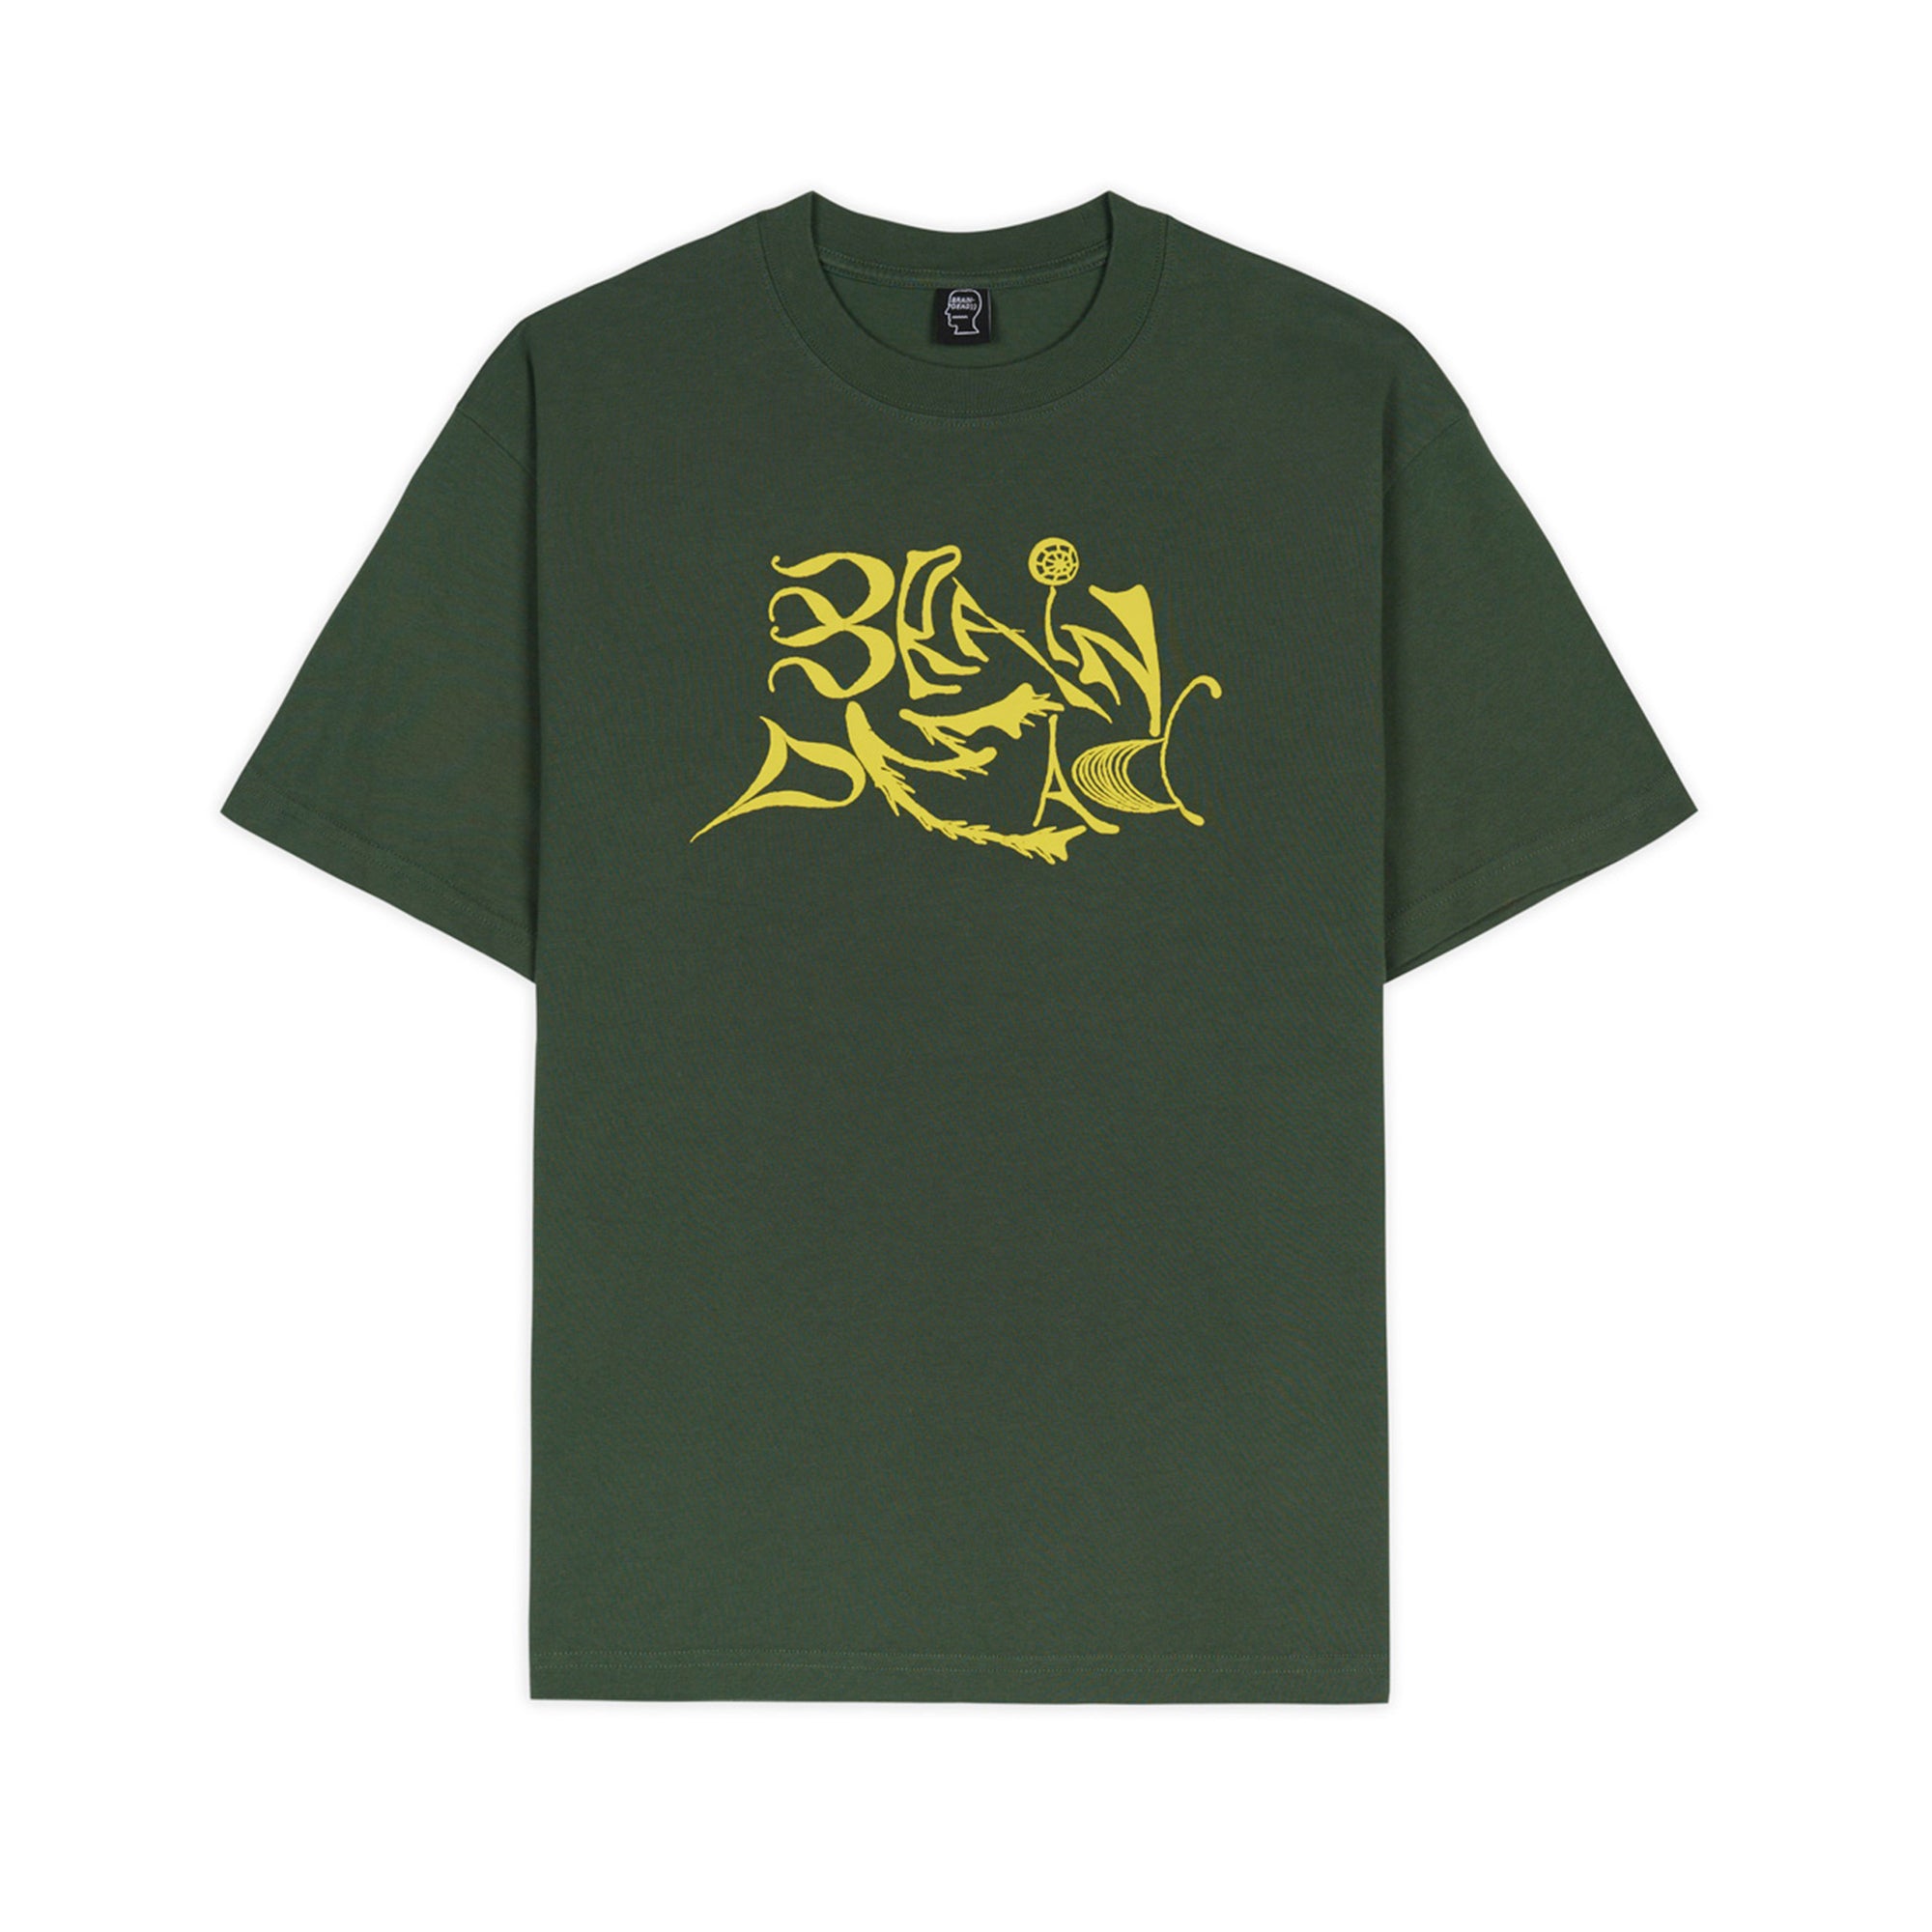 Brain Dead - Men's New Age T-Shirt - (Green) view 1